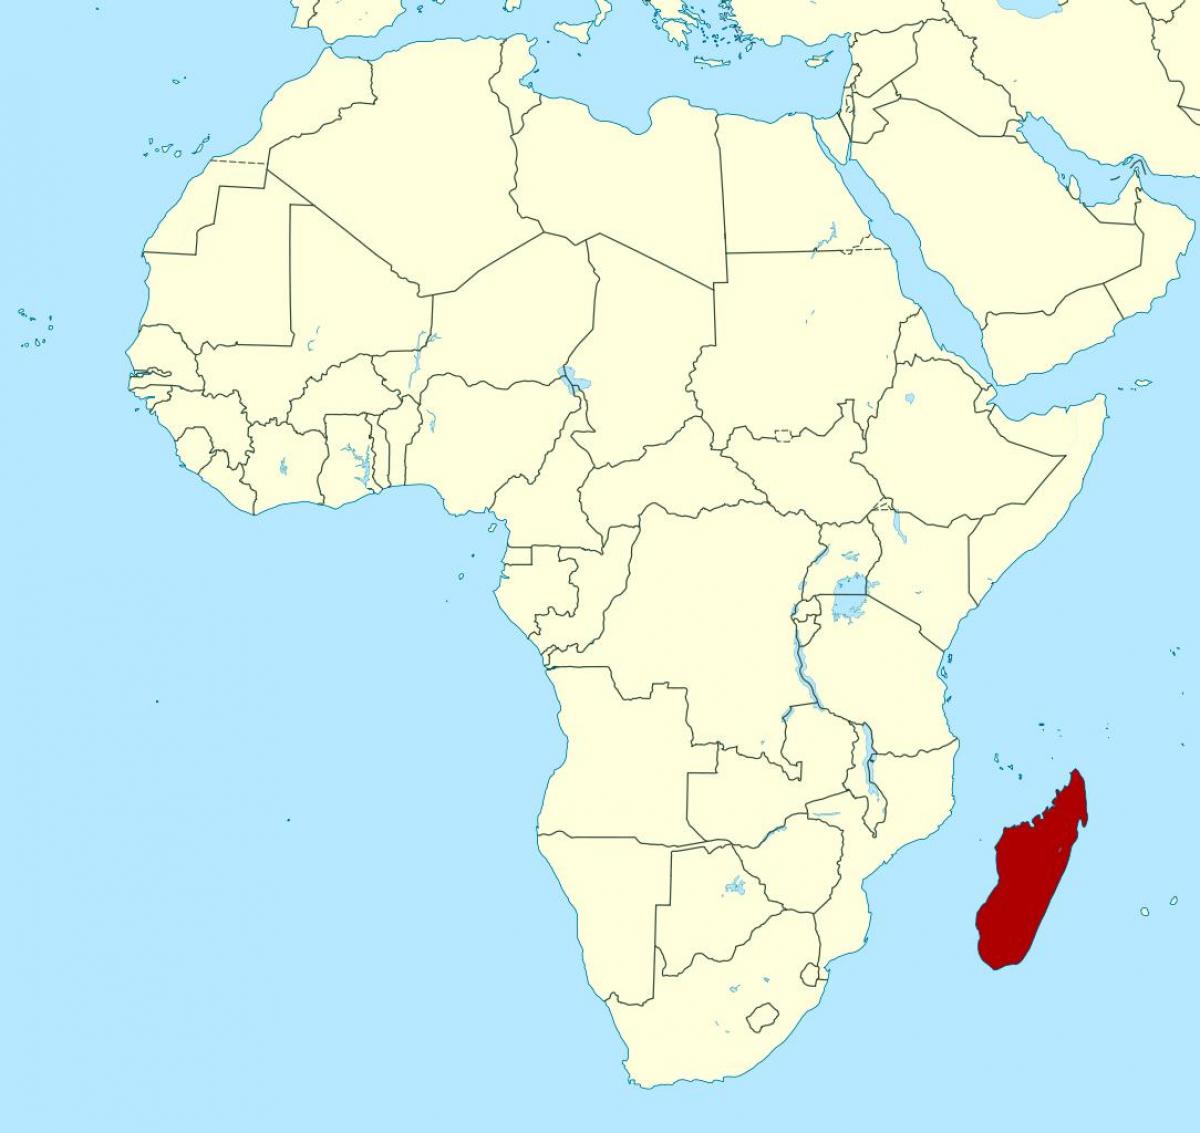 Madagascar sou kat jeyografik di sid